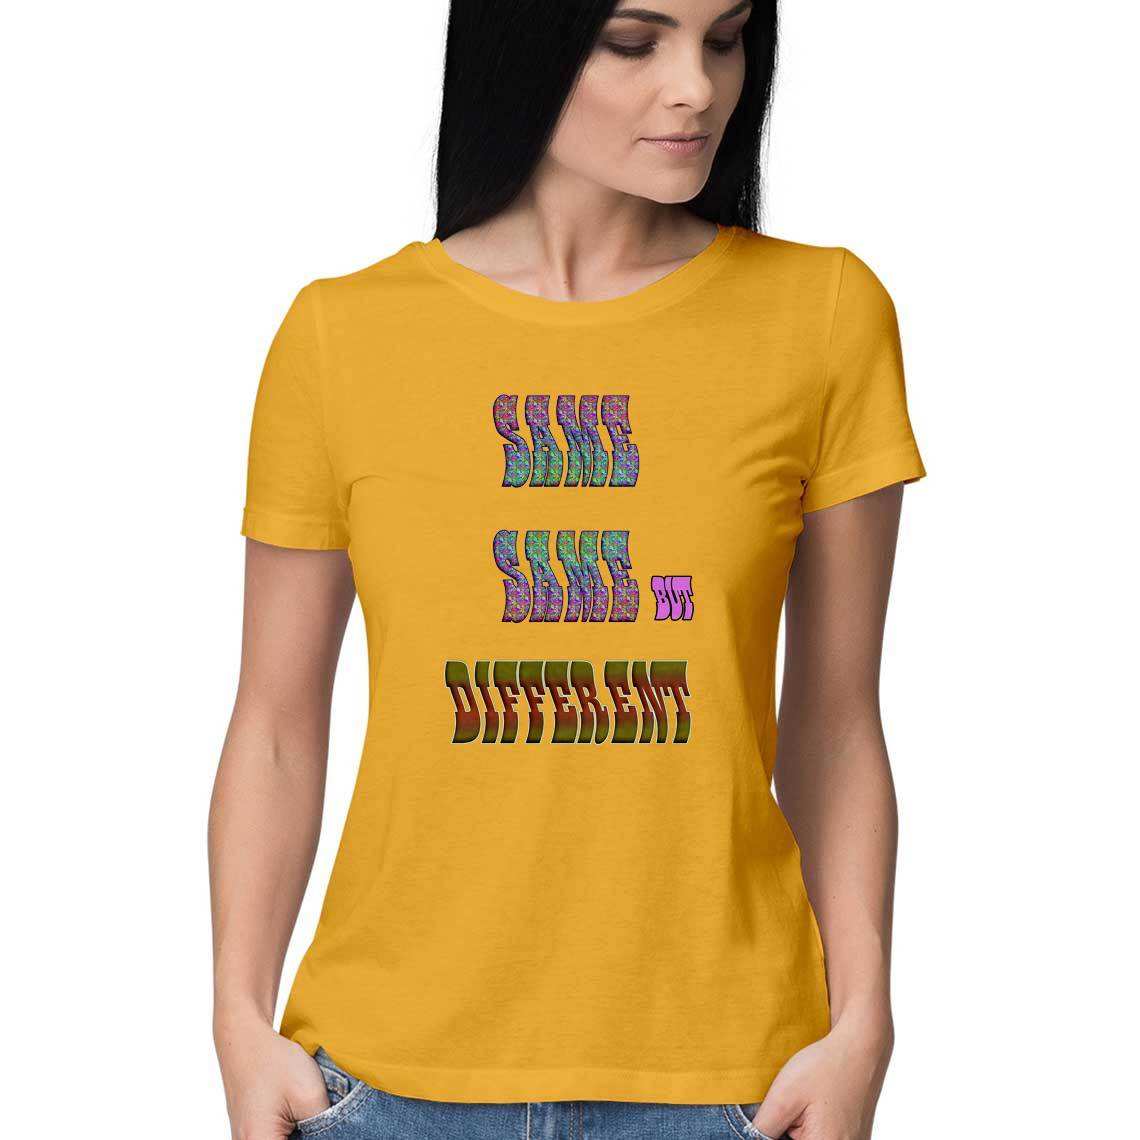 Same, Same but Different Women's T-Shirt - CBD Store India